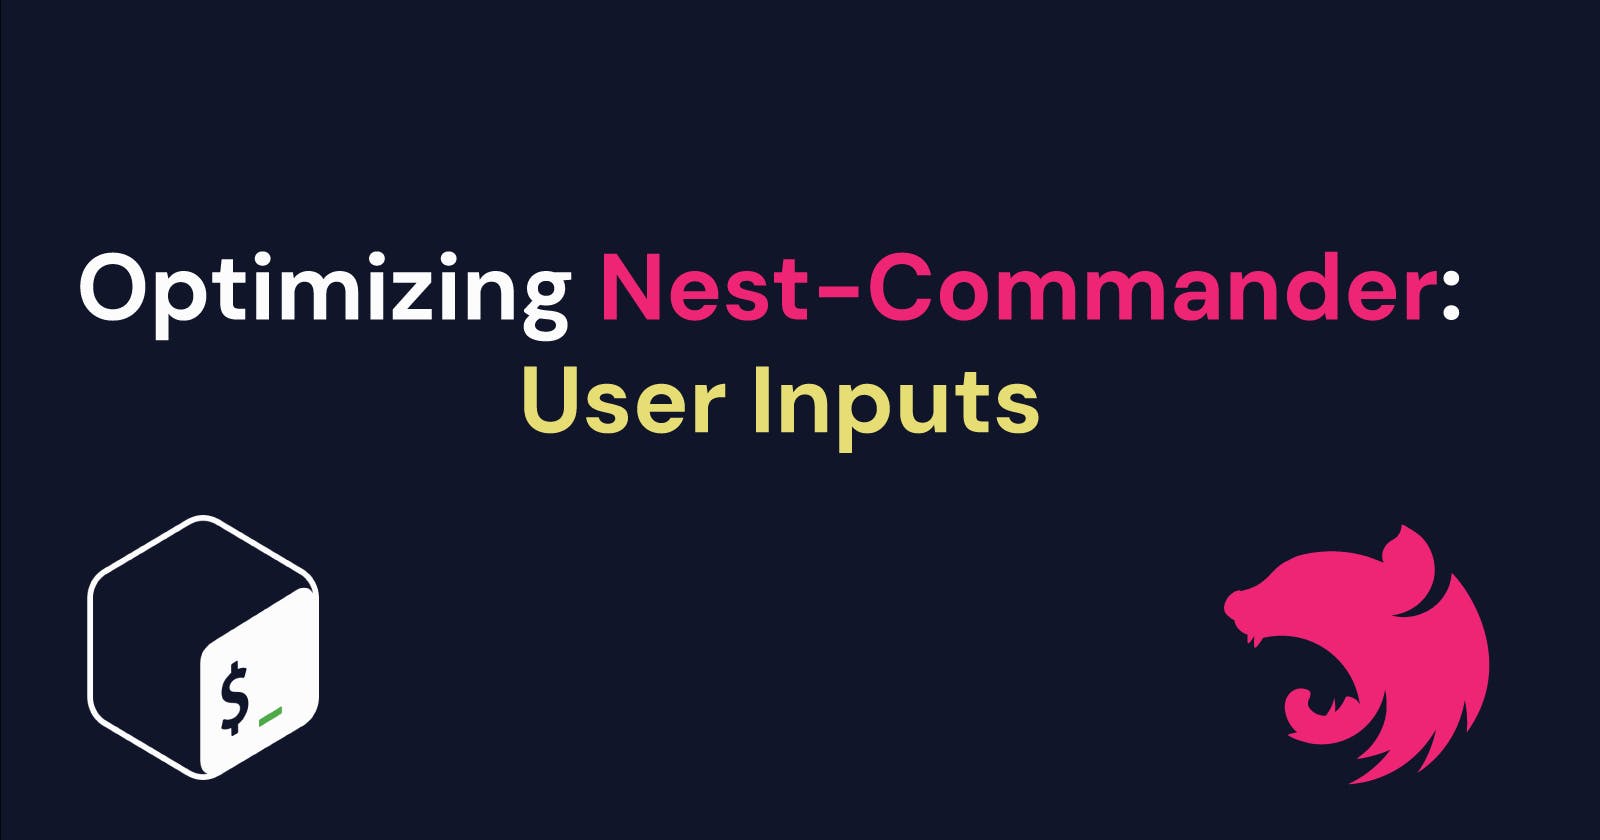 Optimizing Nest-Commander: User Inputs